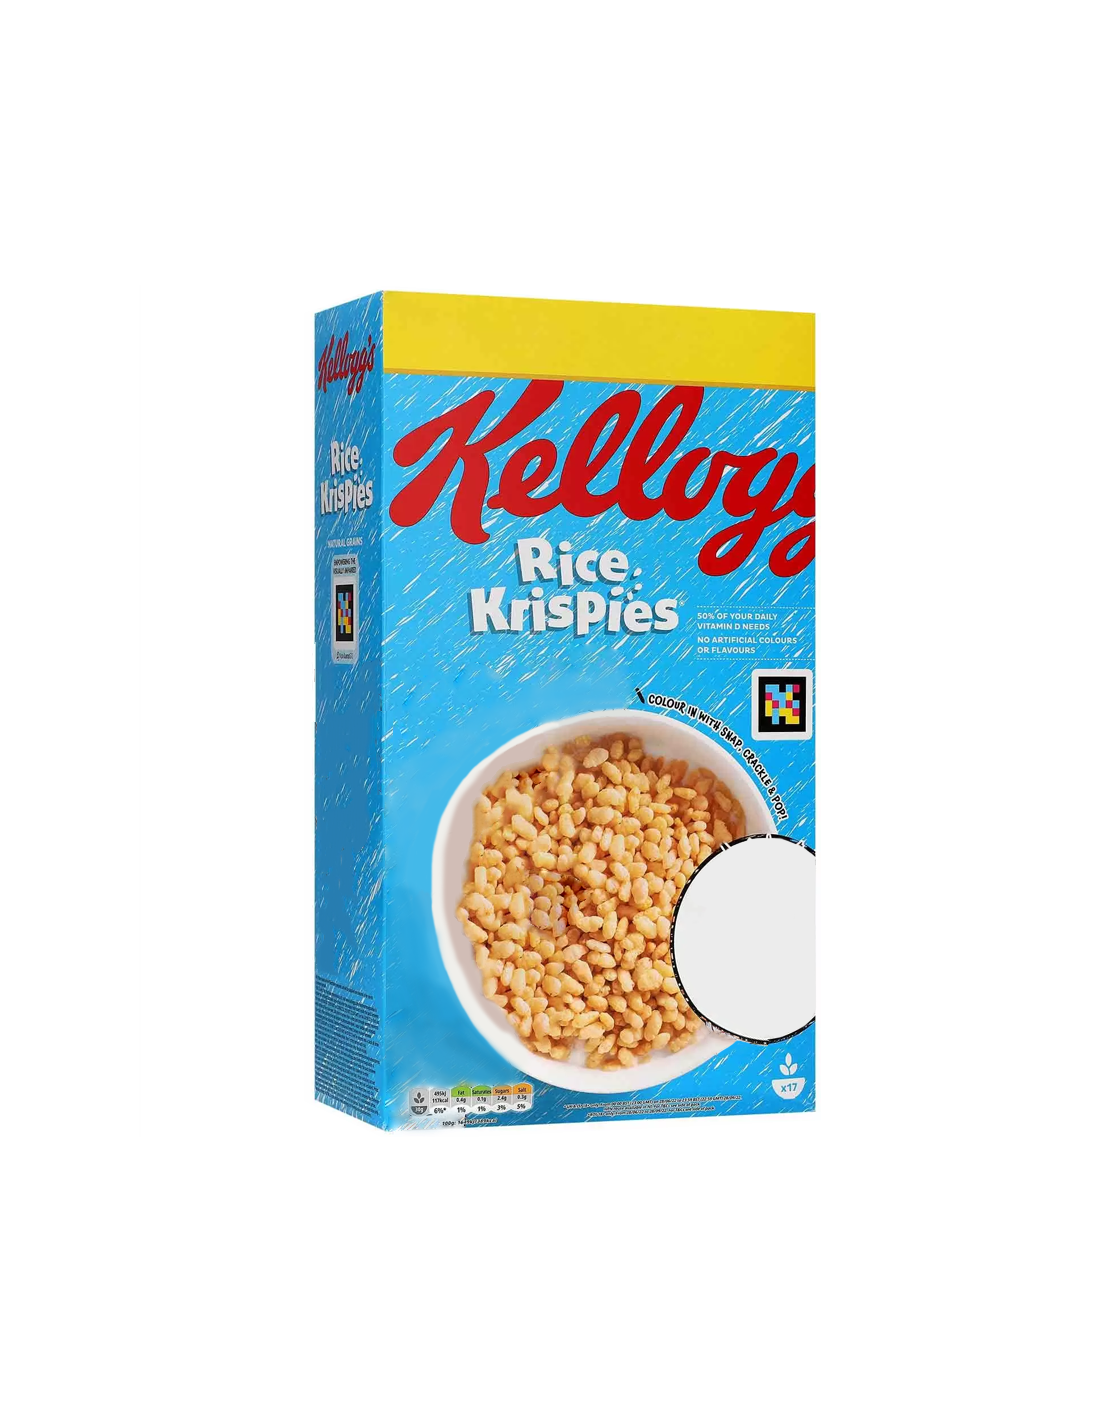 Cereal Rice Krispies Kellogg's